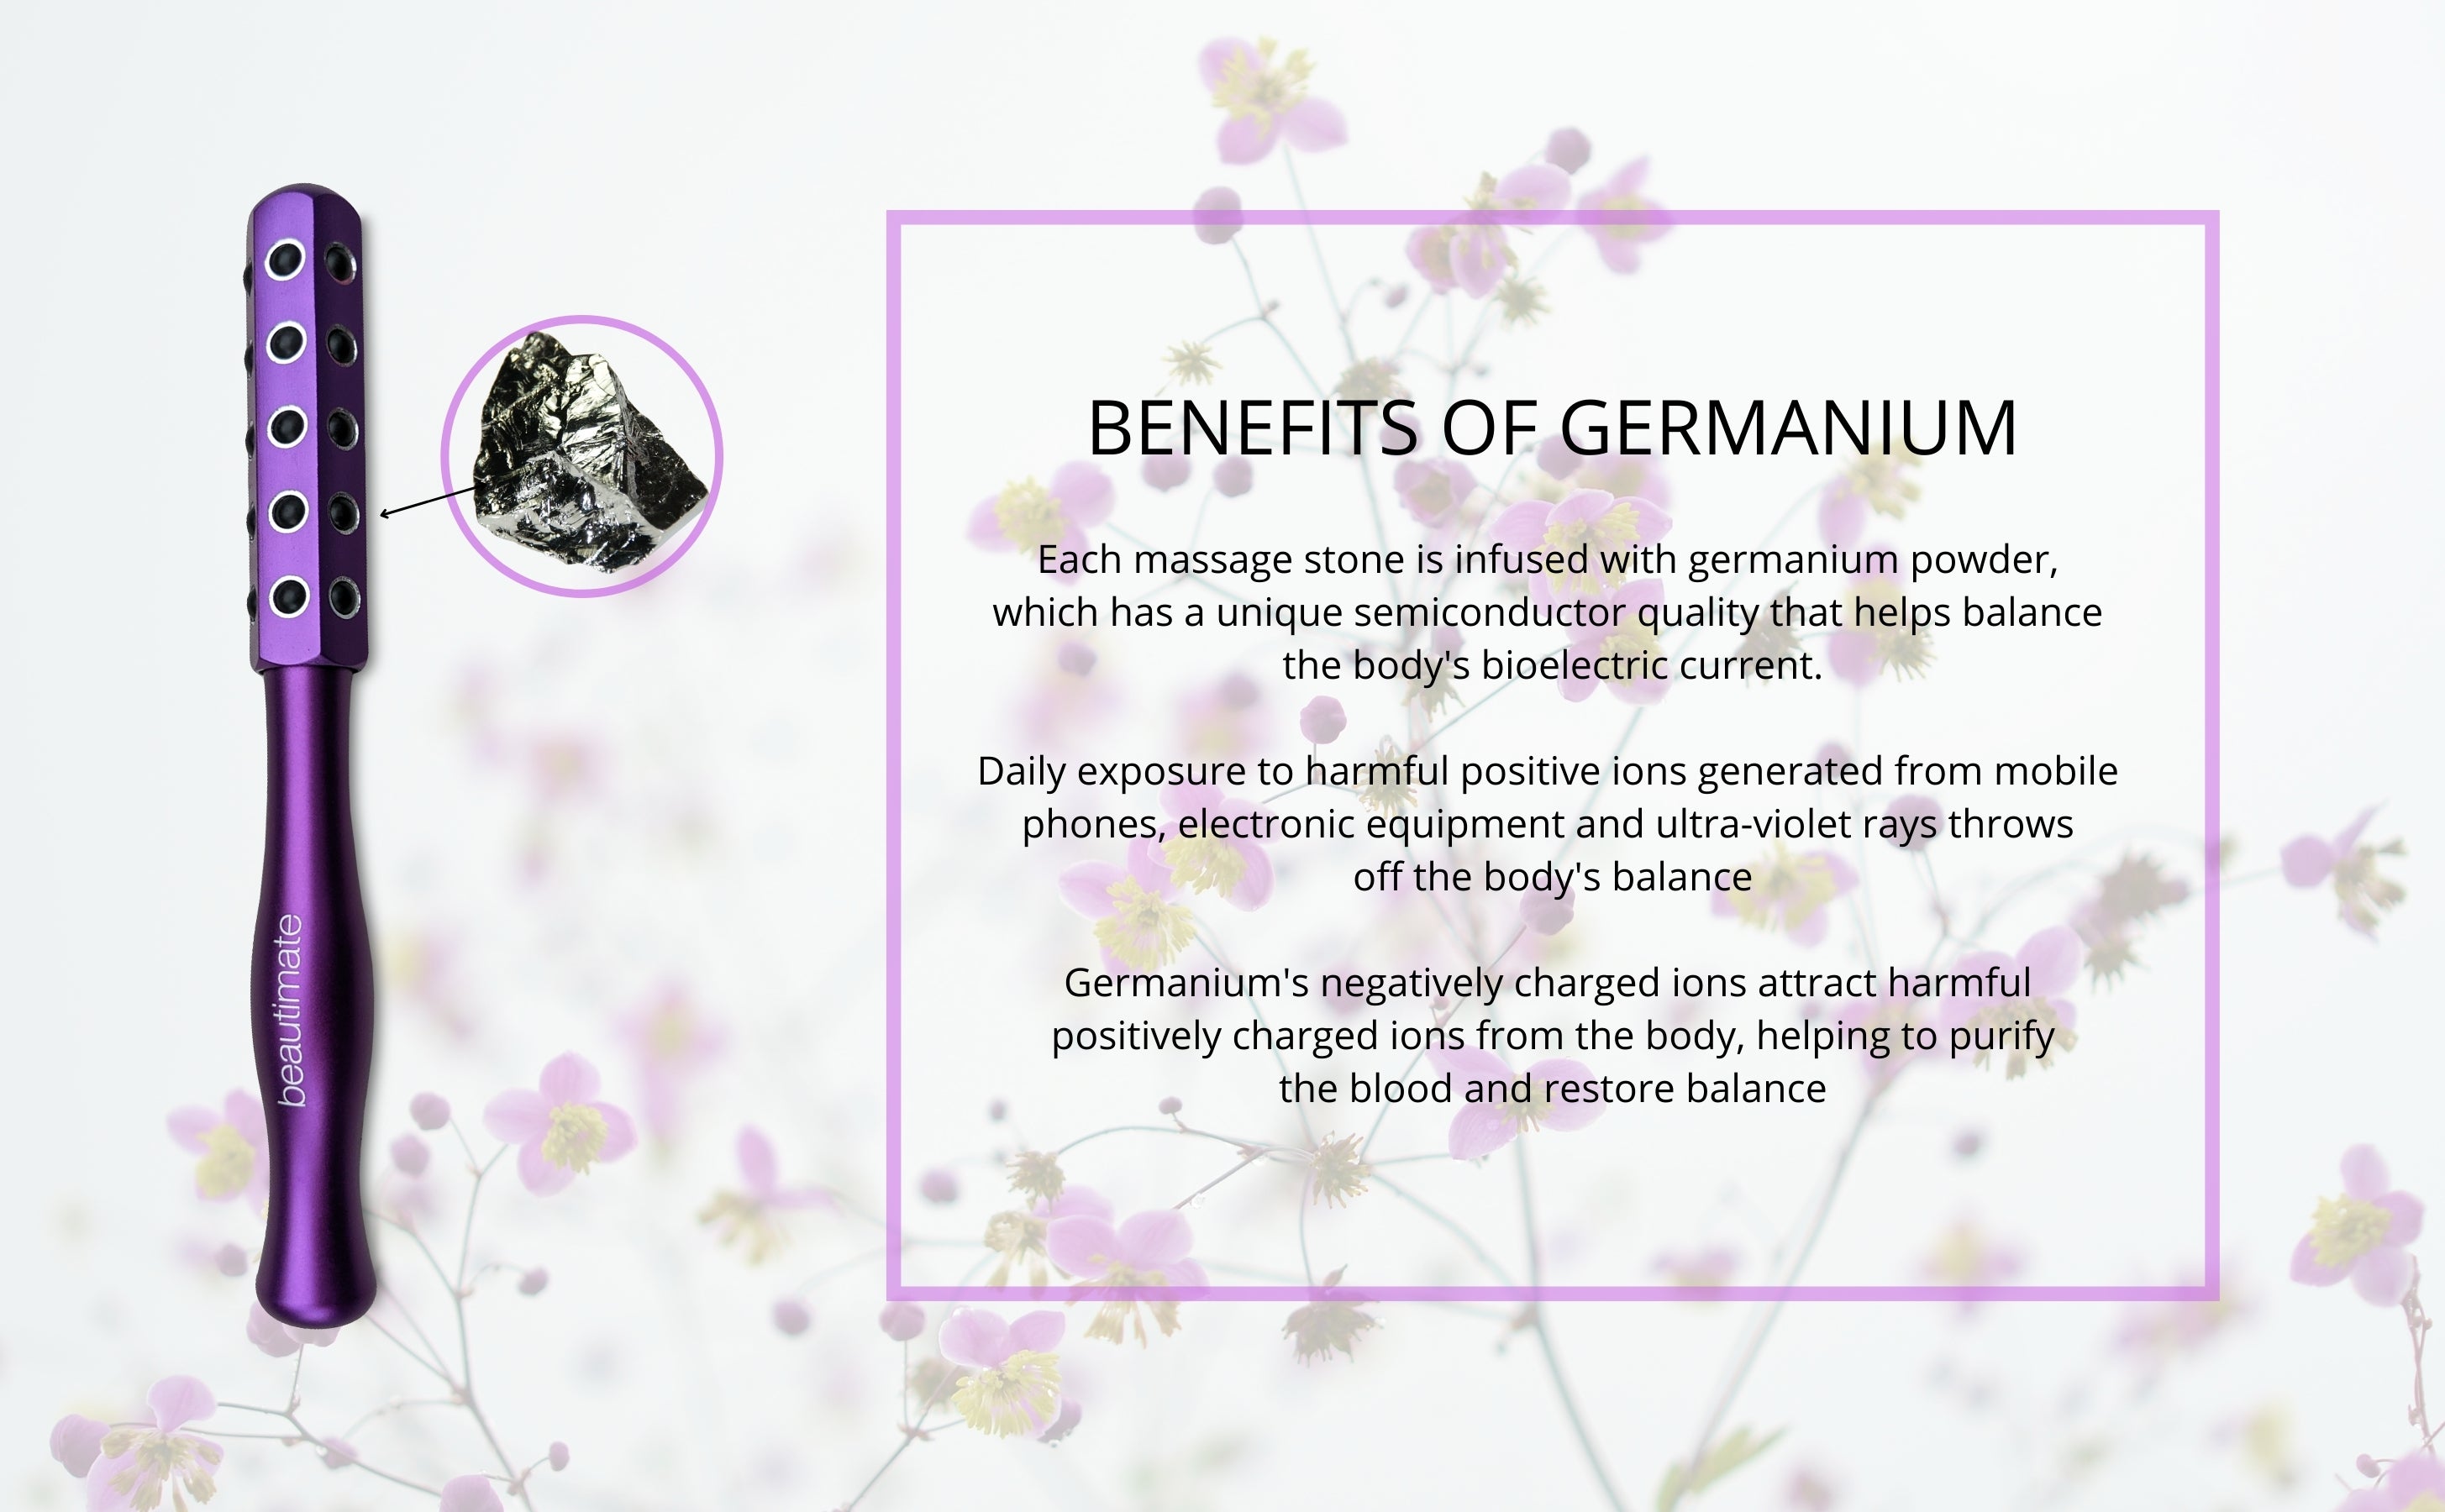 <img src="image.png" alt="benefits of germanium">